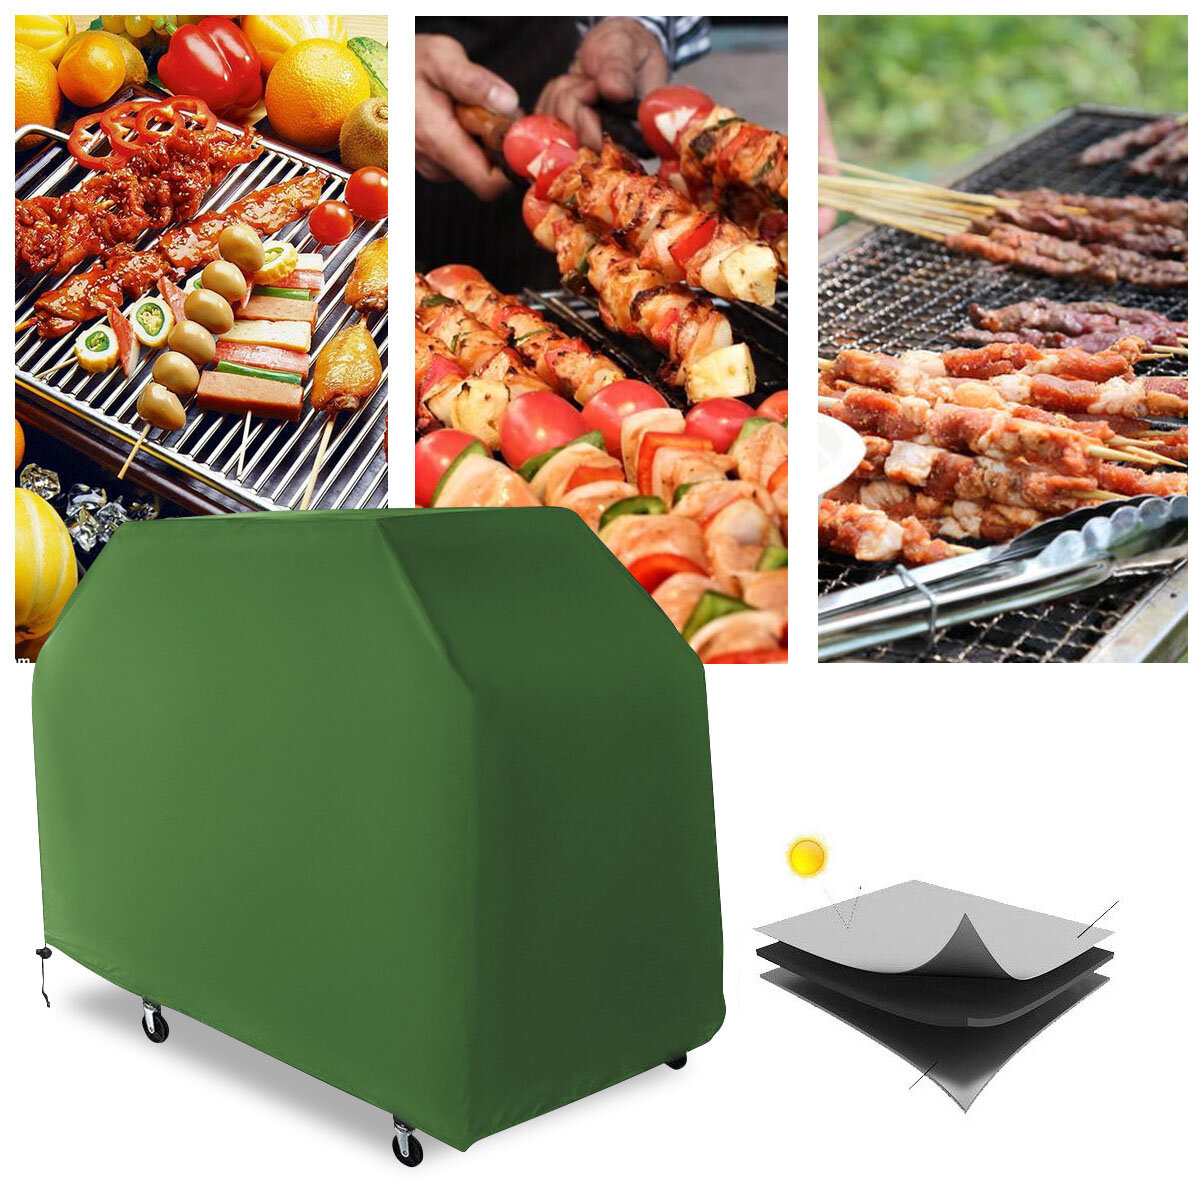 150cm BBQ Grill Cover Waterdichte Barbecue Anti-stof Beschermer met Opbergtas Camping Picknick